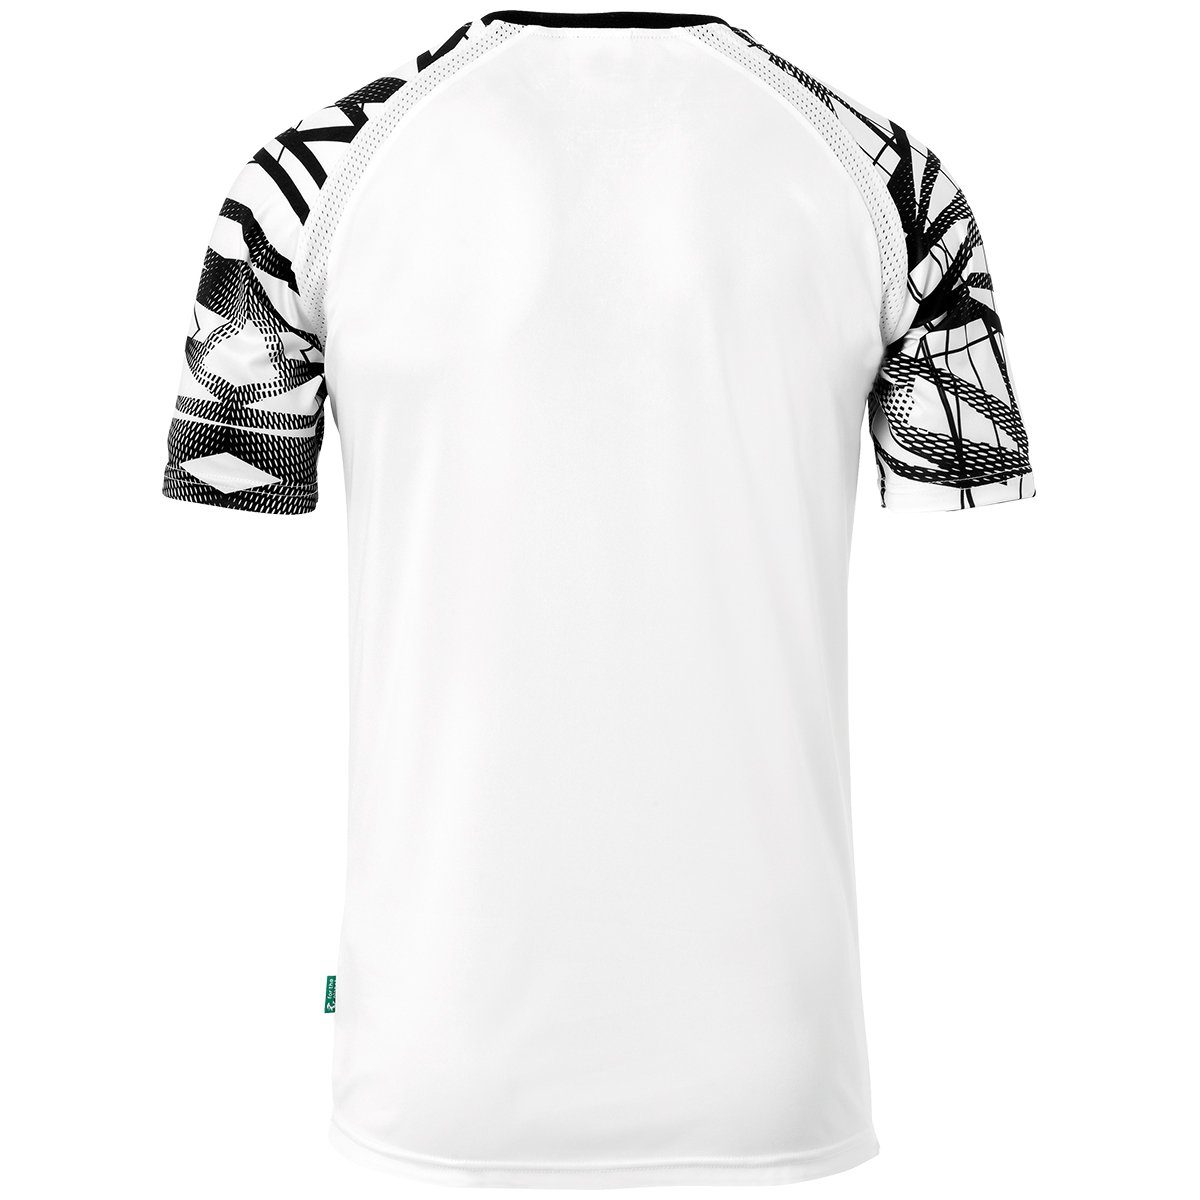 atmungsaktiv Trainings-T-Shirt weiß/schwarz uhlsport 25 KURZARM GOAL Trainingsshirt uhlsport TRIKOT